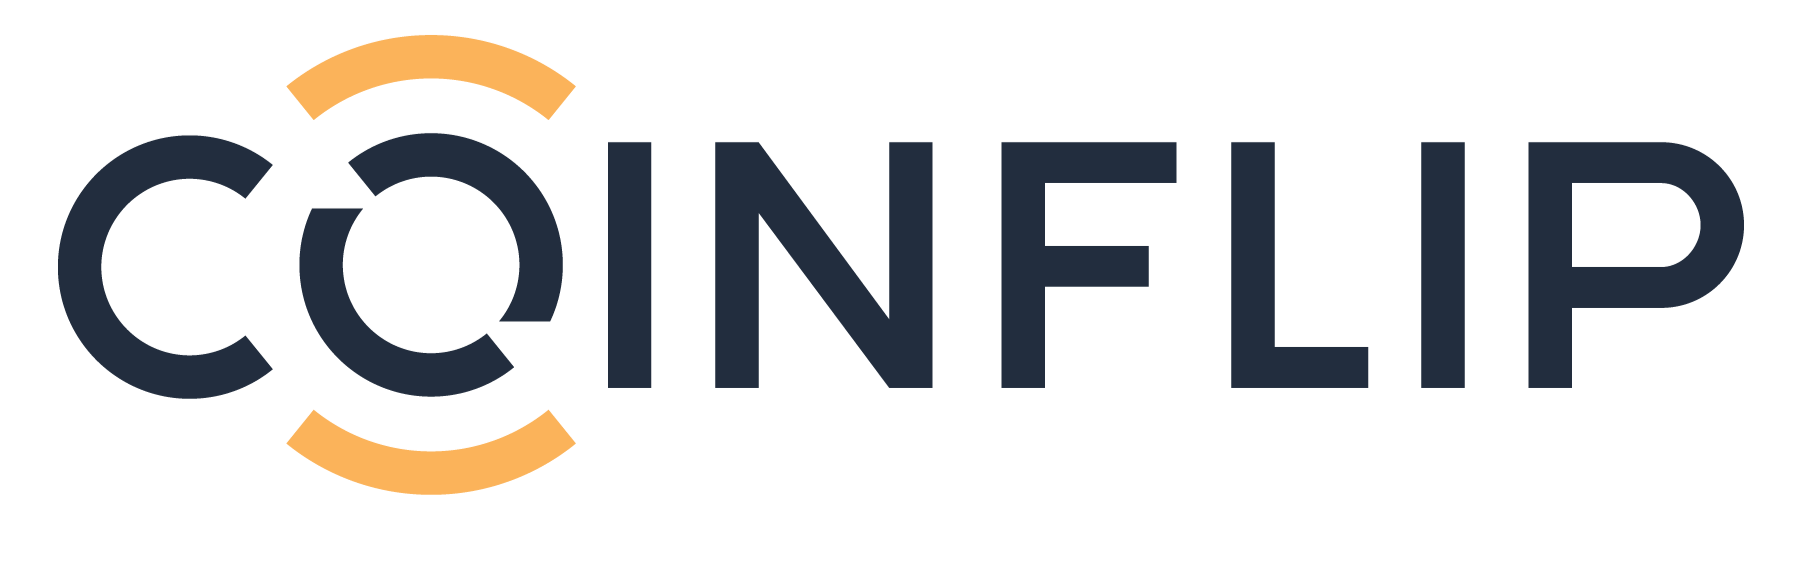 CoinFlip Logo